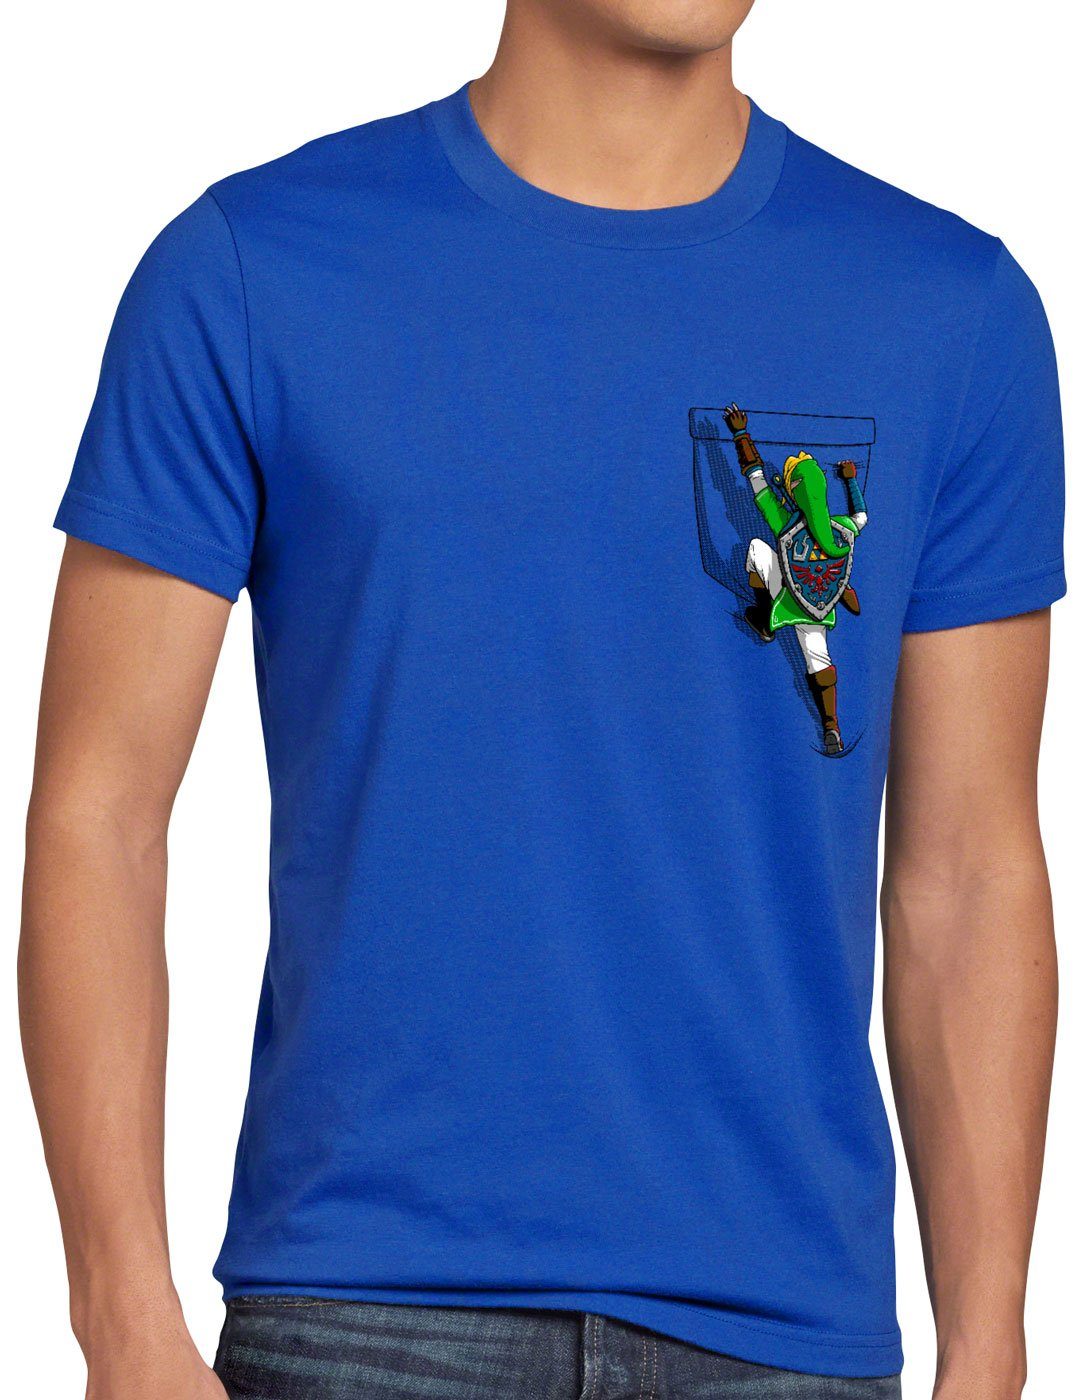 Brusttasche Link switch blau of breath ocarina wild Herren the Print-Shirt T-Shirt style3 snes